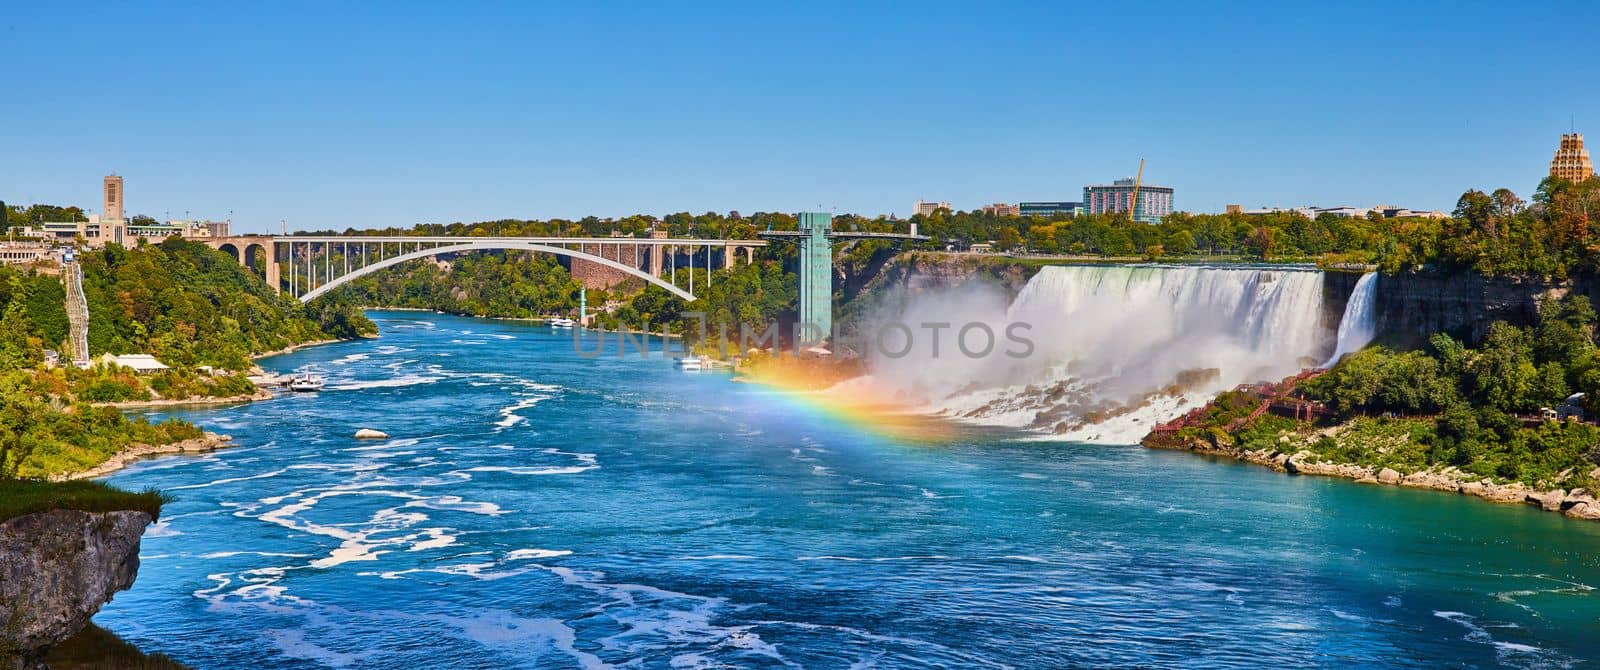 Stunning rainbow over Niagara River looking at American Falls and Rainbow Bridge by njproductions